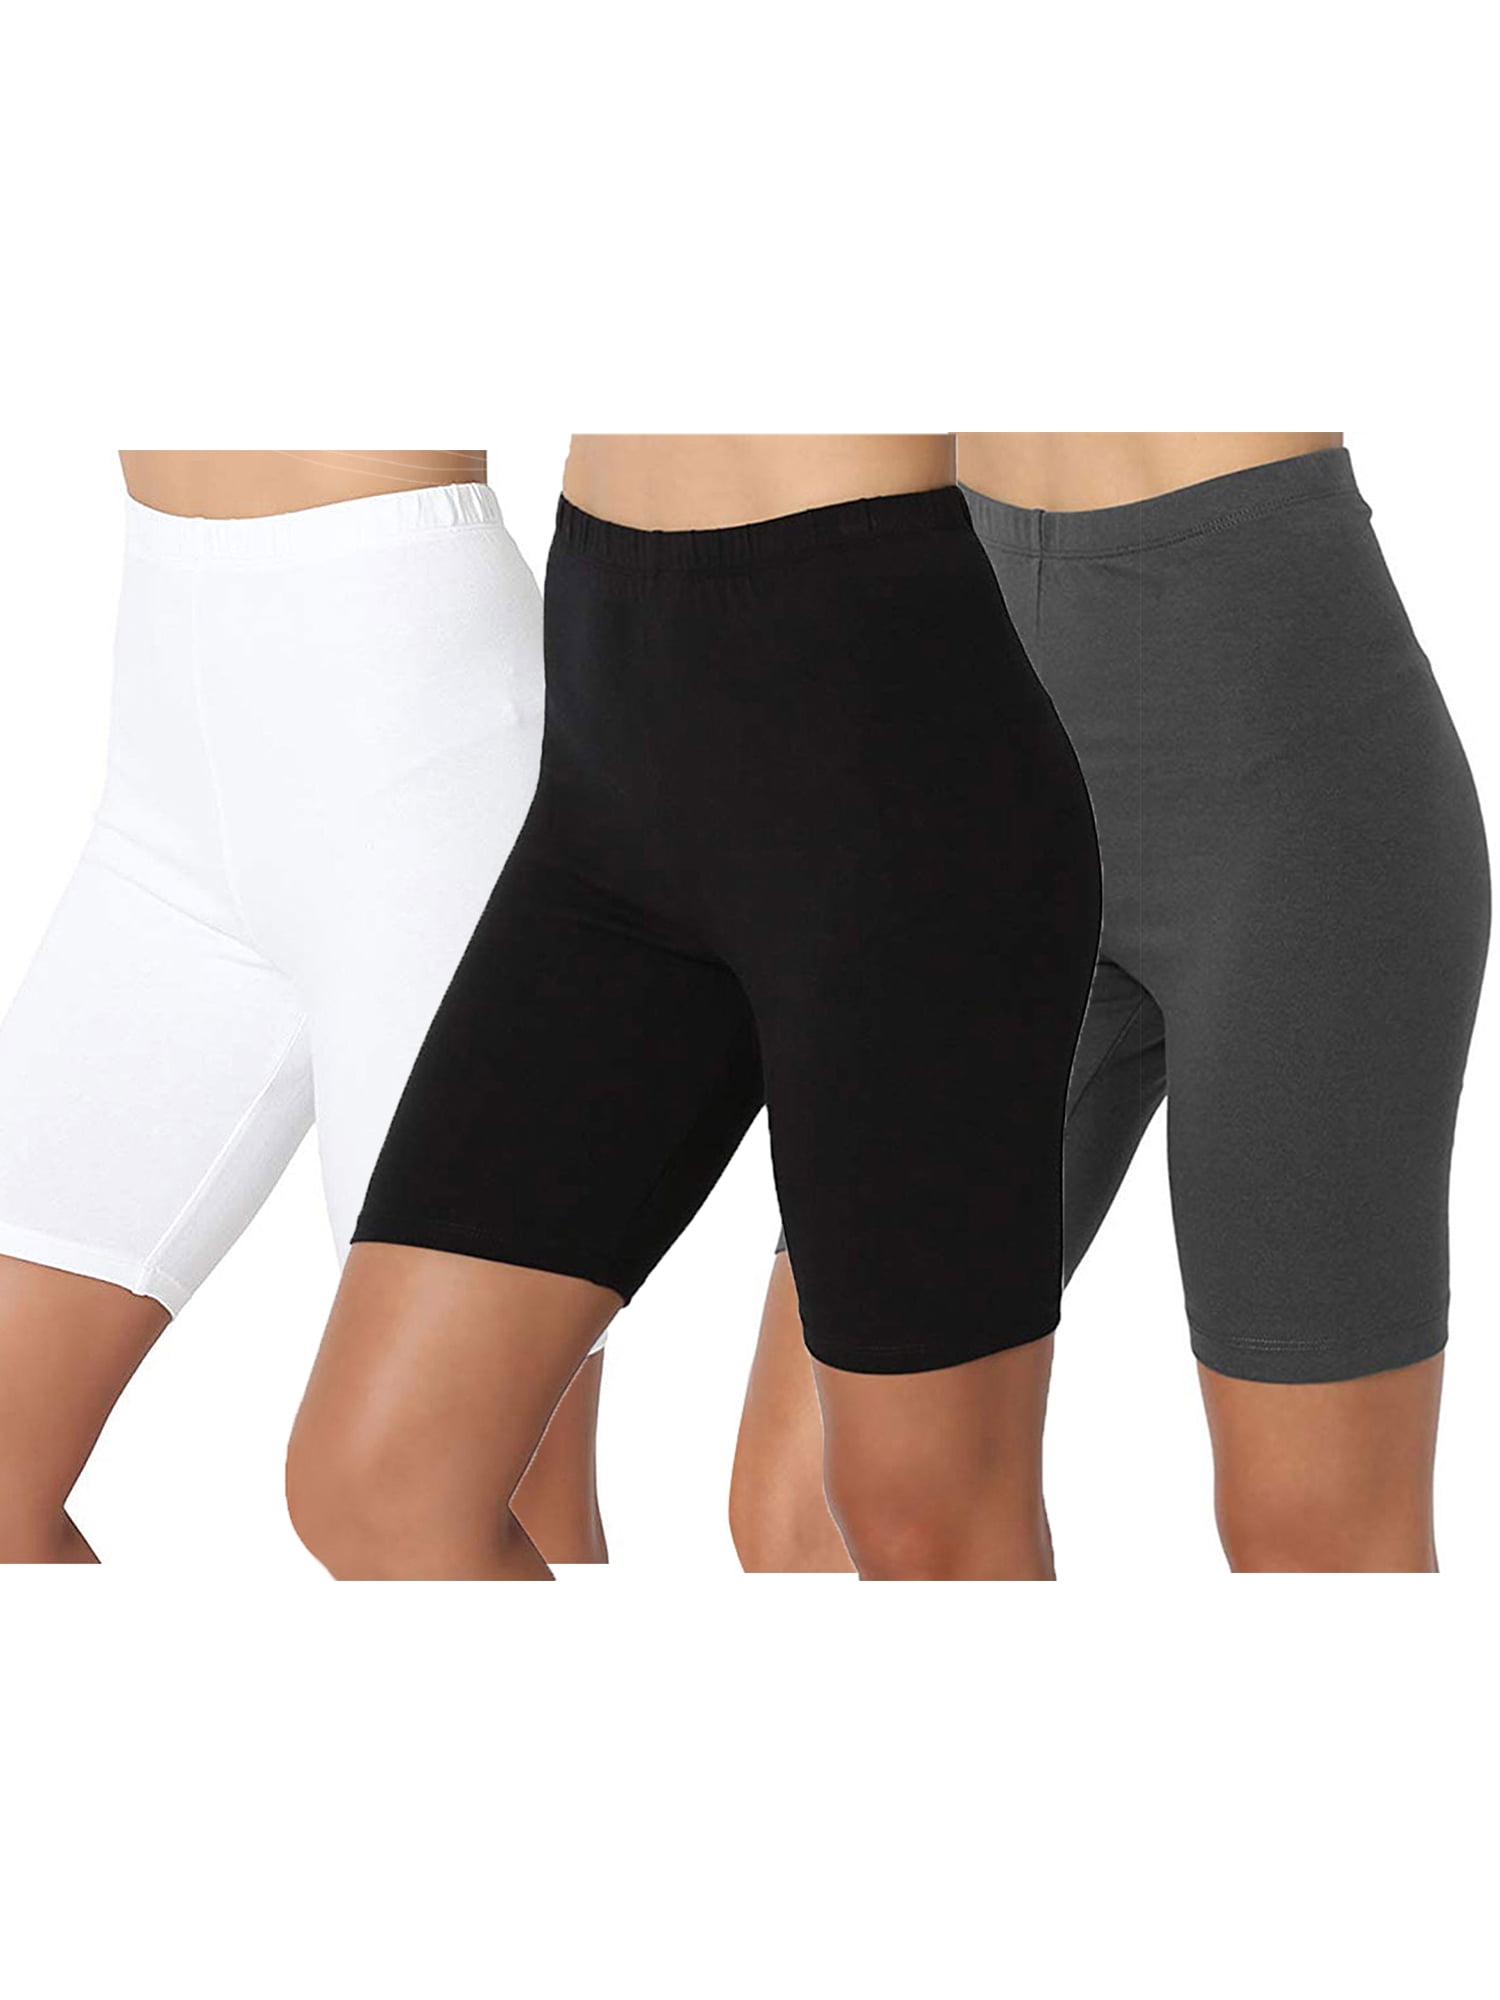 Eshoppingwarehouse Womens Stretchable Plain Neon Hot Pants Laides Girls Dance Gym Cycling Shorts Small/XLarge 